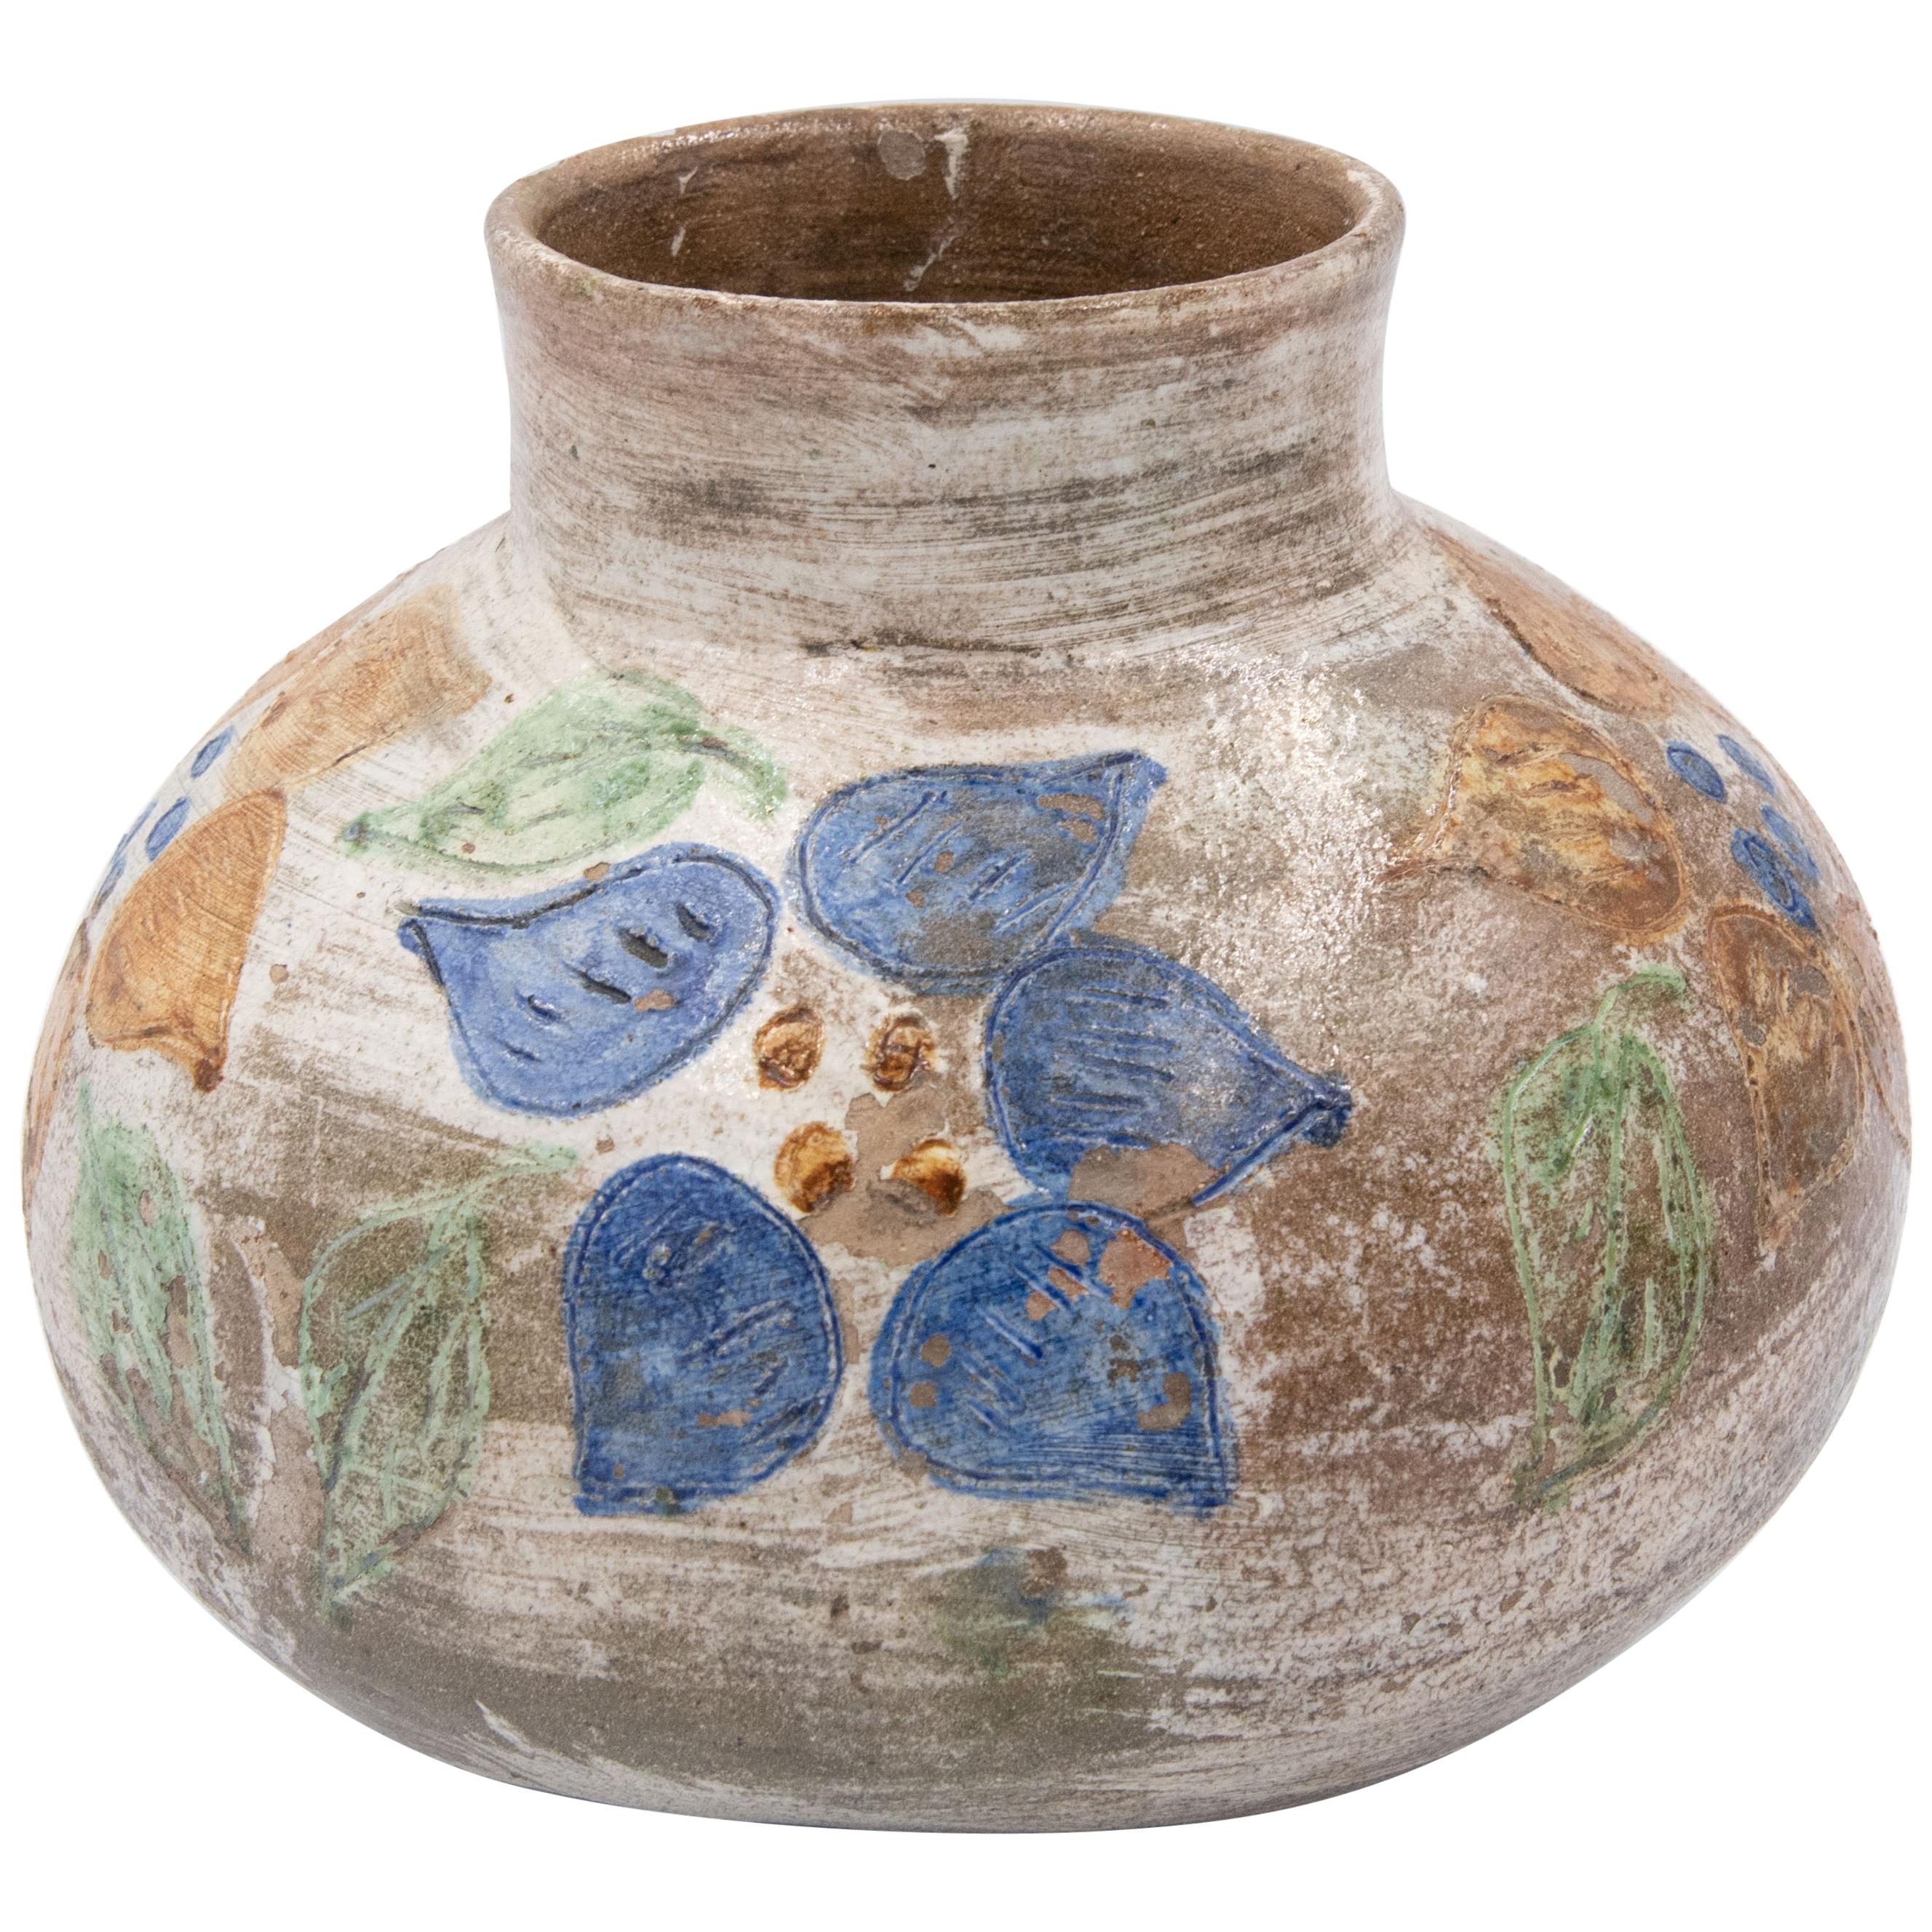 Very Old Clay Vessel Clay Pot Clay Pots Flower Vase Rustic Bowl Unique Pot Ceramic Vase Antique Clay Jug Ceramic Pot Unique decor